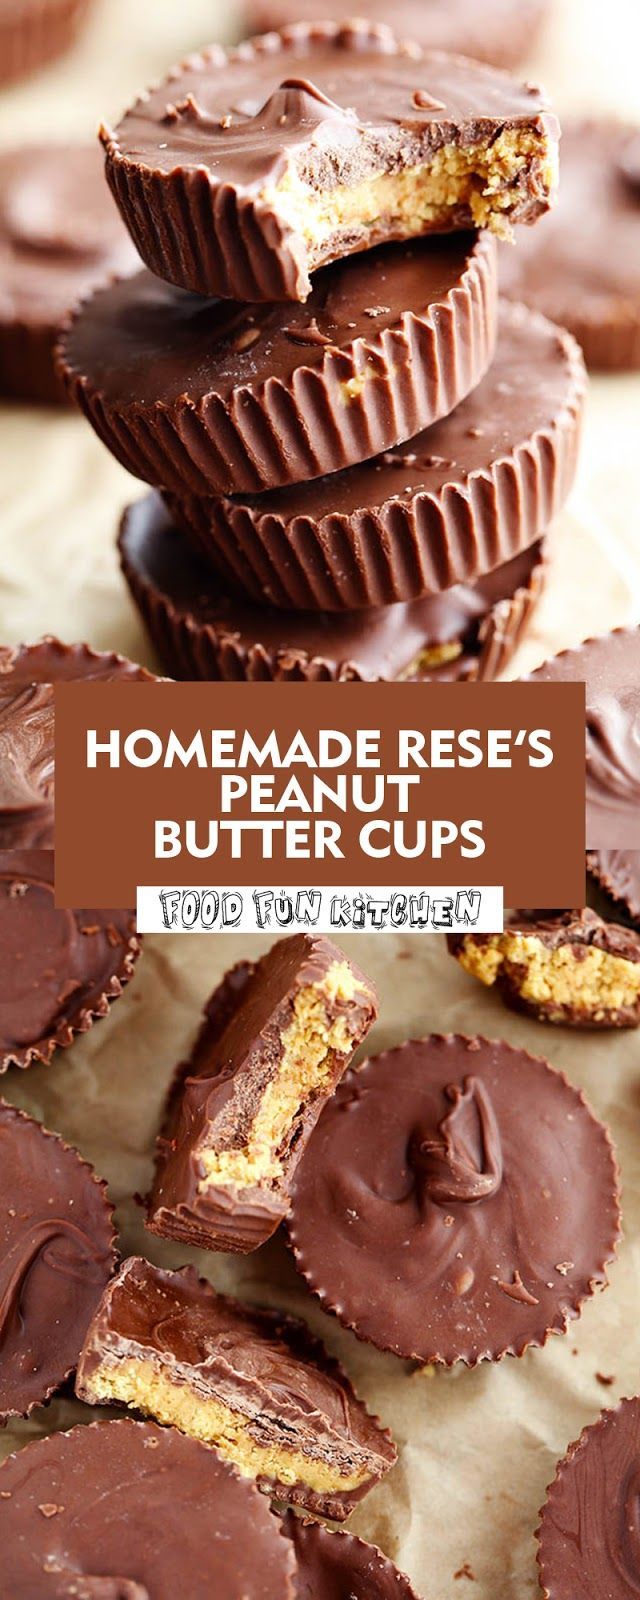 10 desserts Birthday peanut butter cups ideas